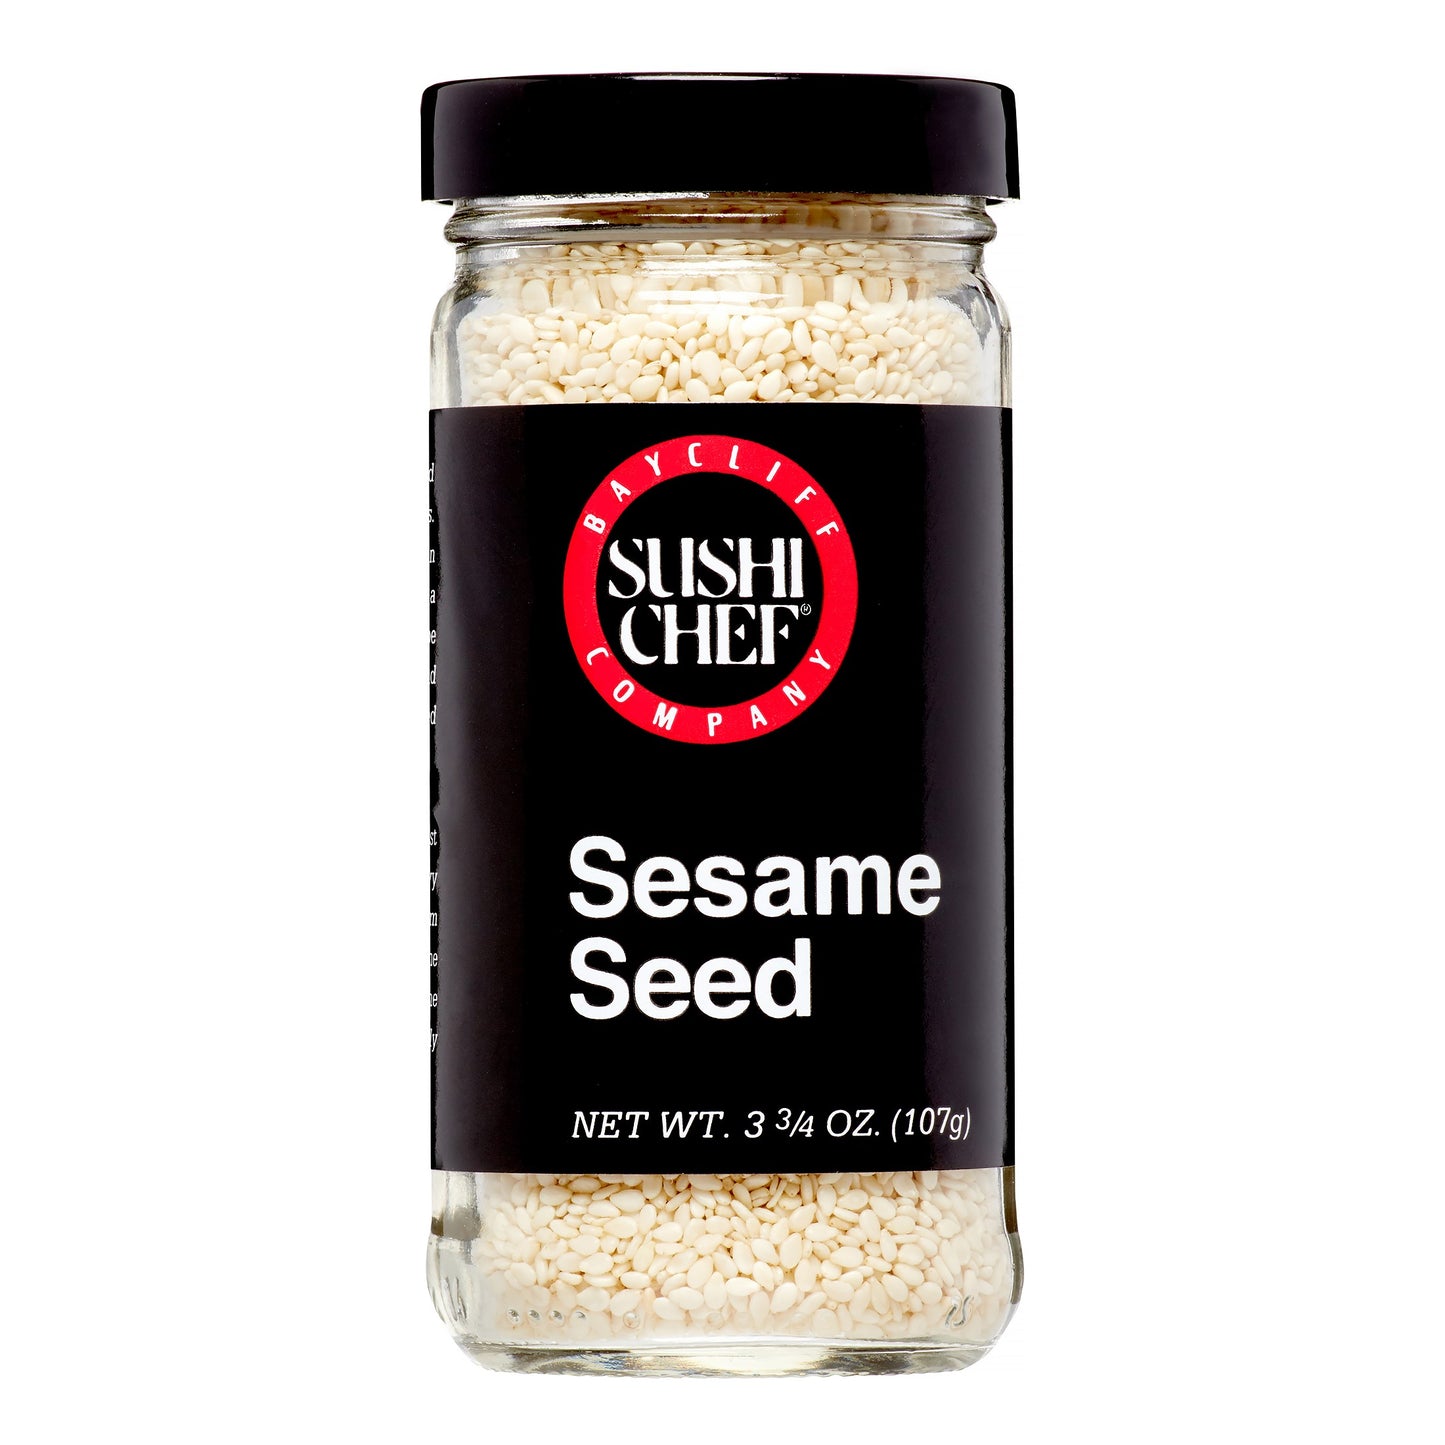 Baycliff Company Sushi Chef White Sesame Seed, 3.75 OZ